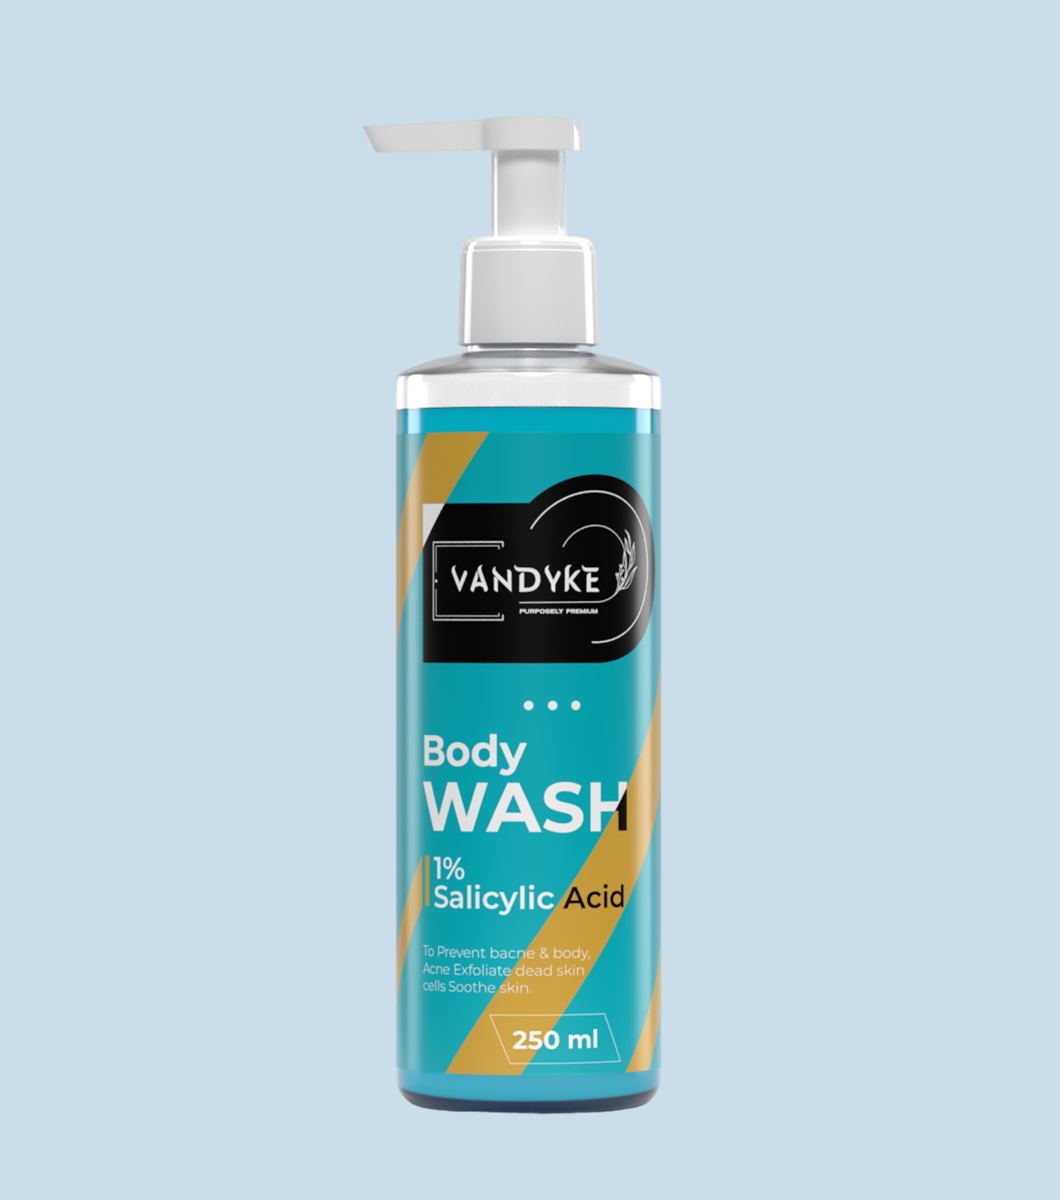 Body Wash Salicylic Acid 1% - Vandyke